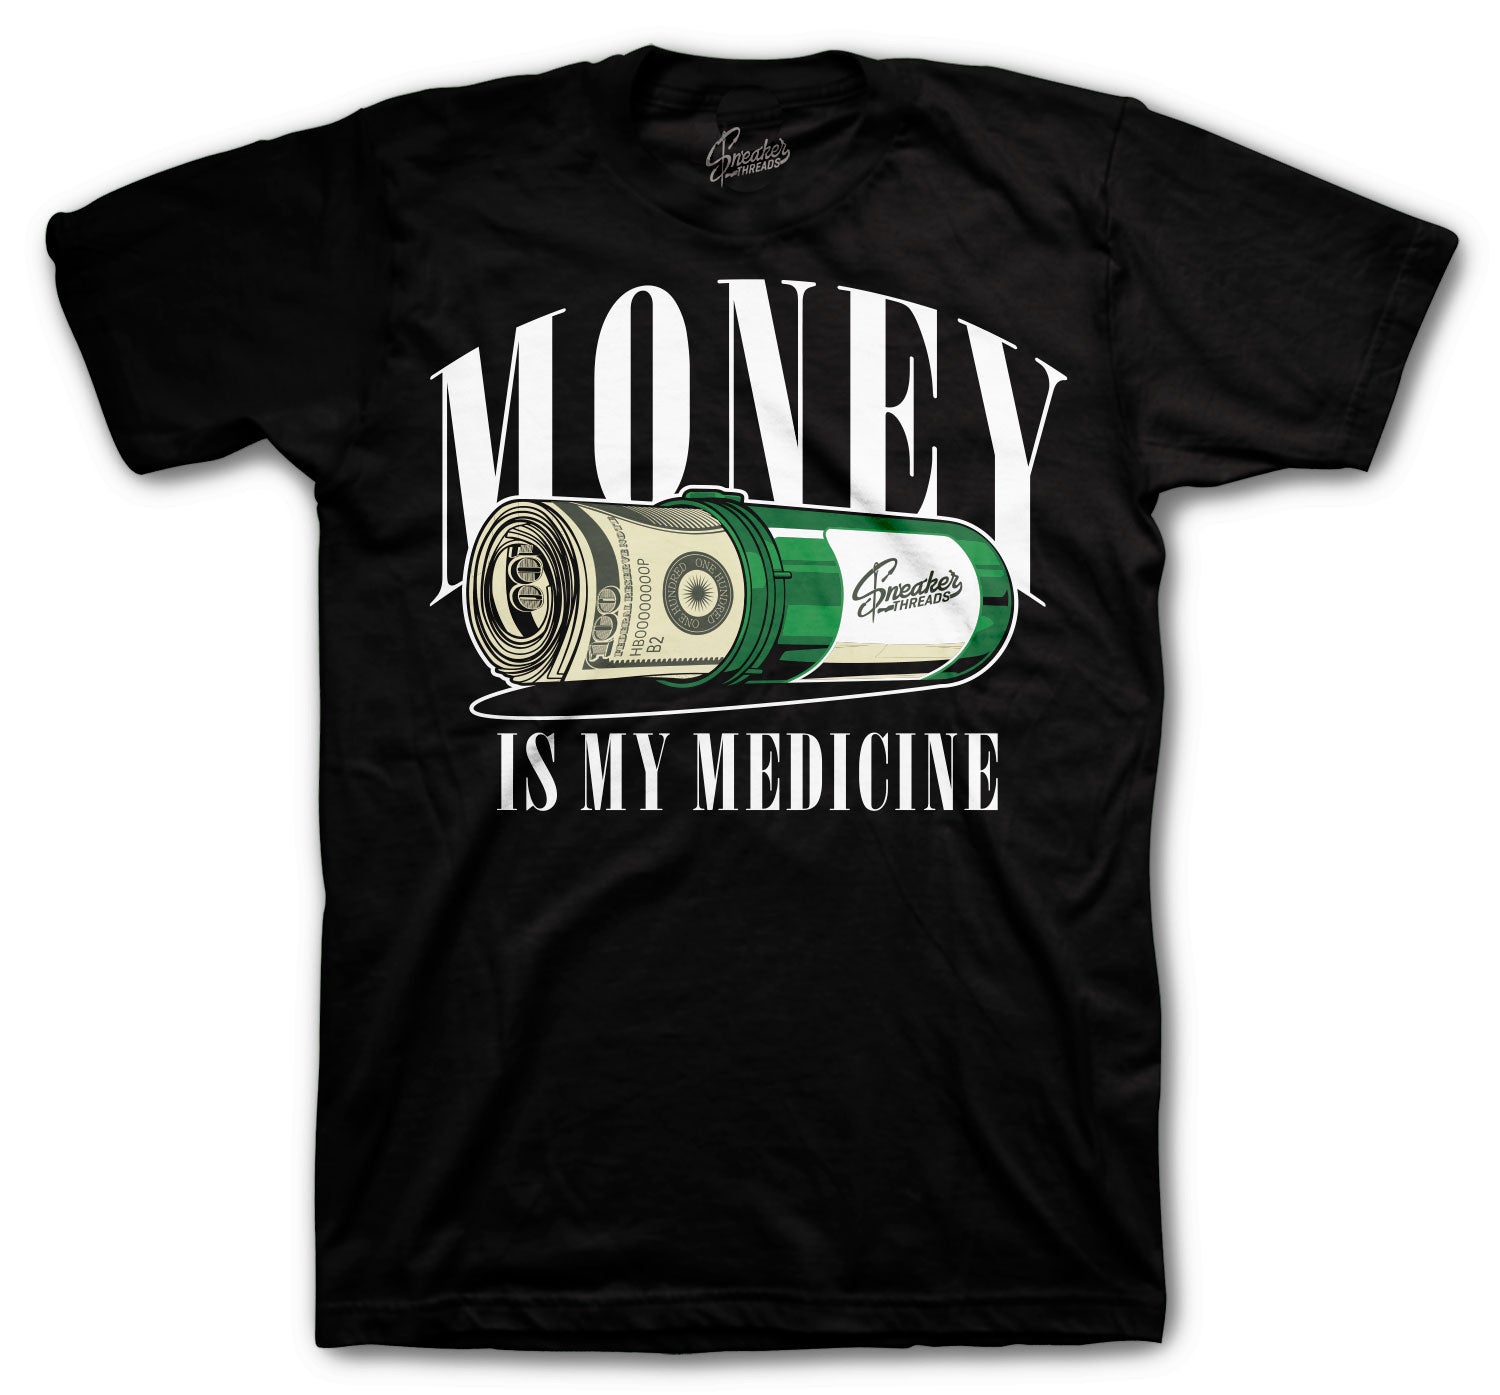 Retro 3 Pine Green Shirt - Medicine - Black